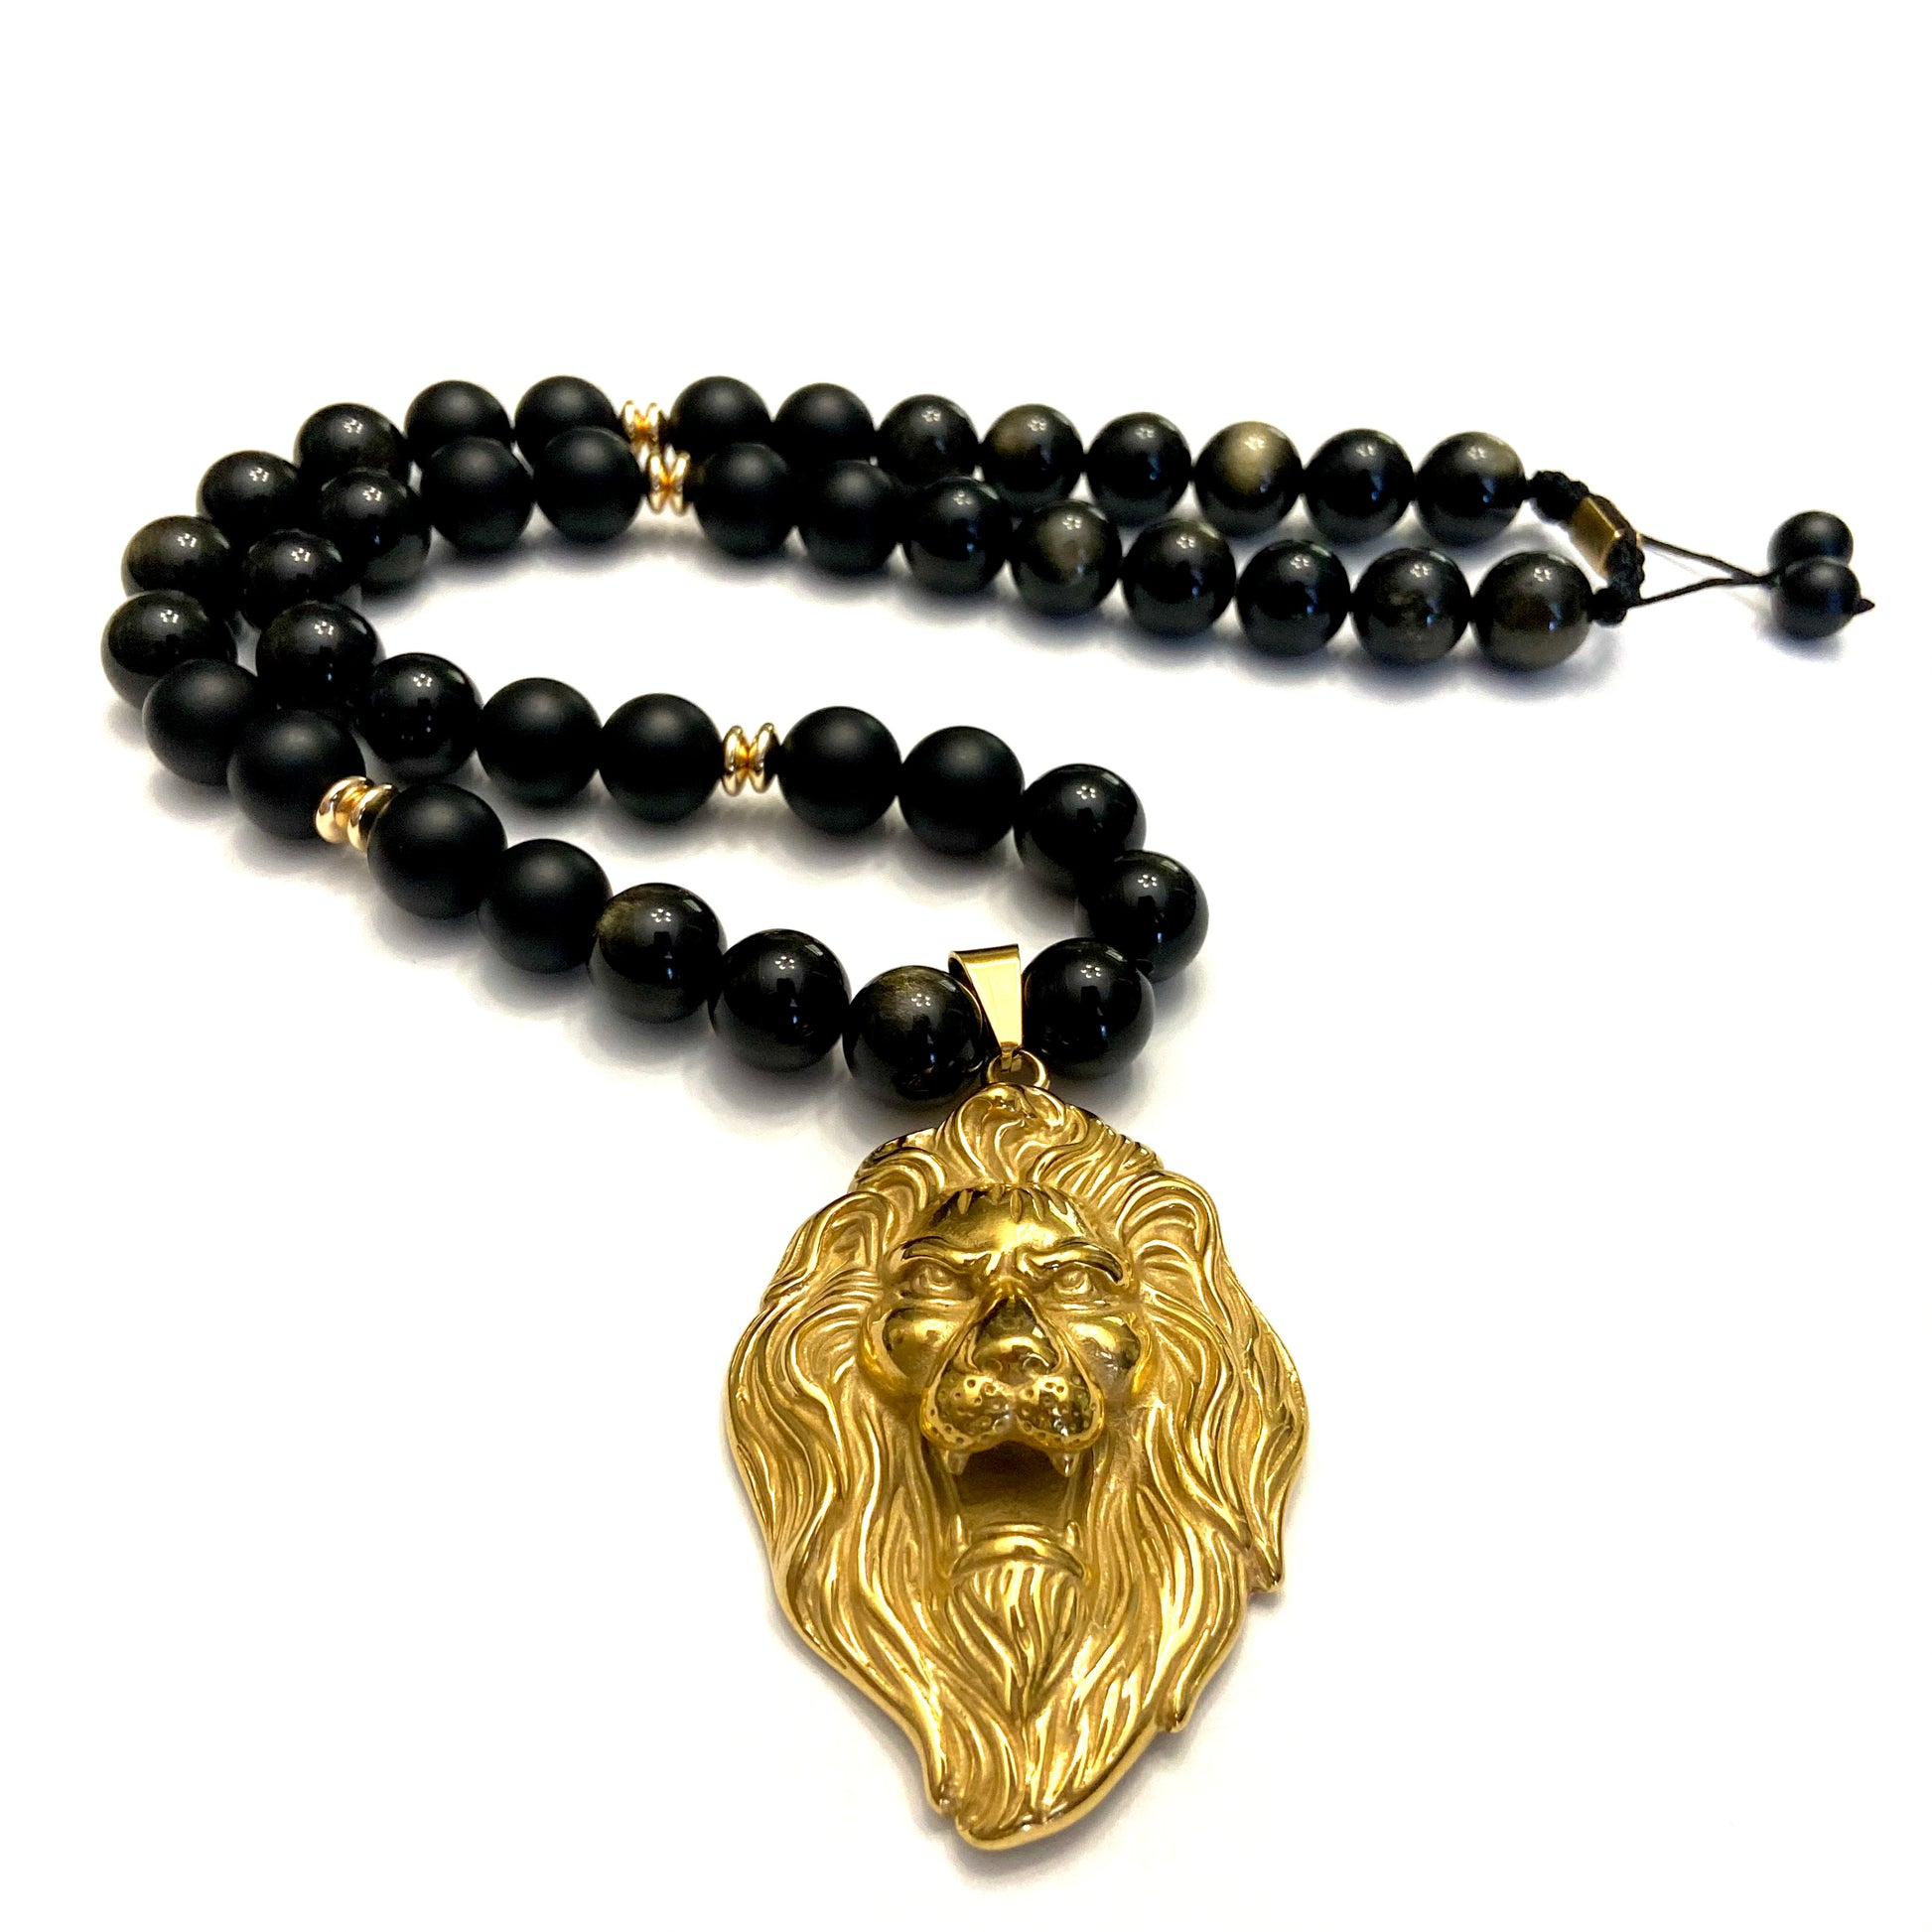 XL Onyx & Gold Judah Lion Onyx Necklace Chaka Beads